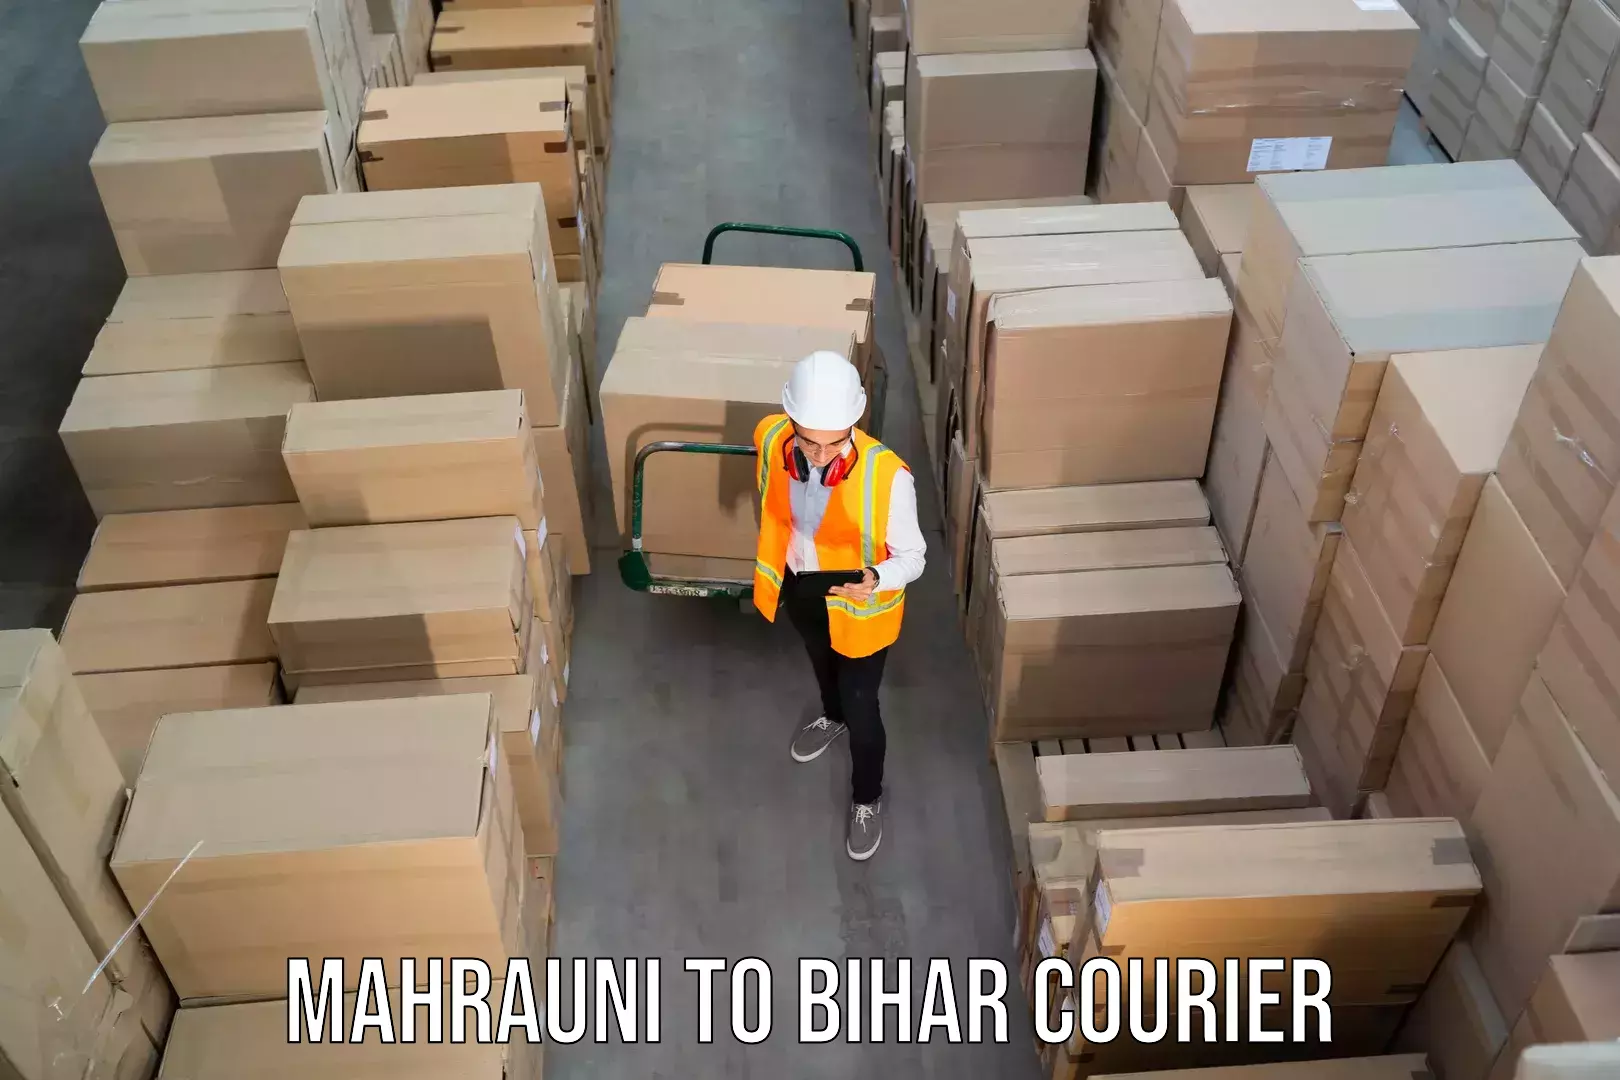 Doorstep delivery service Mahrauni to Malmaliya